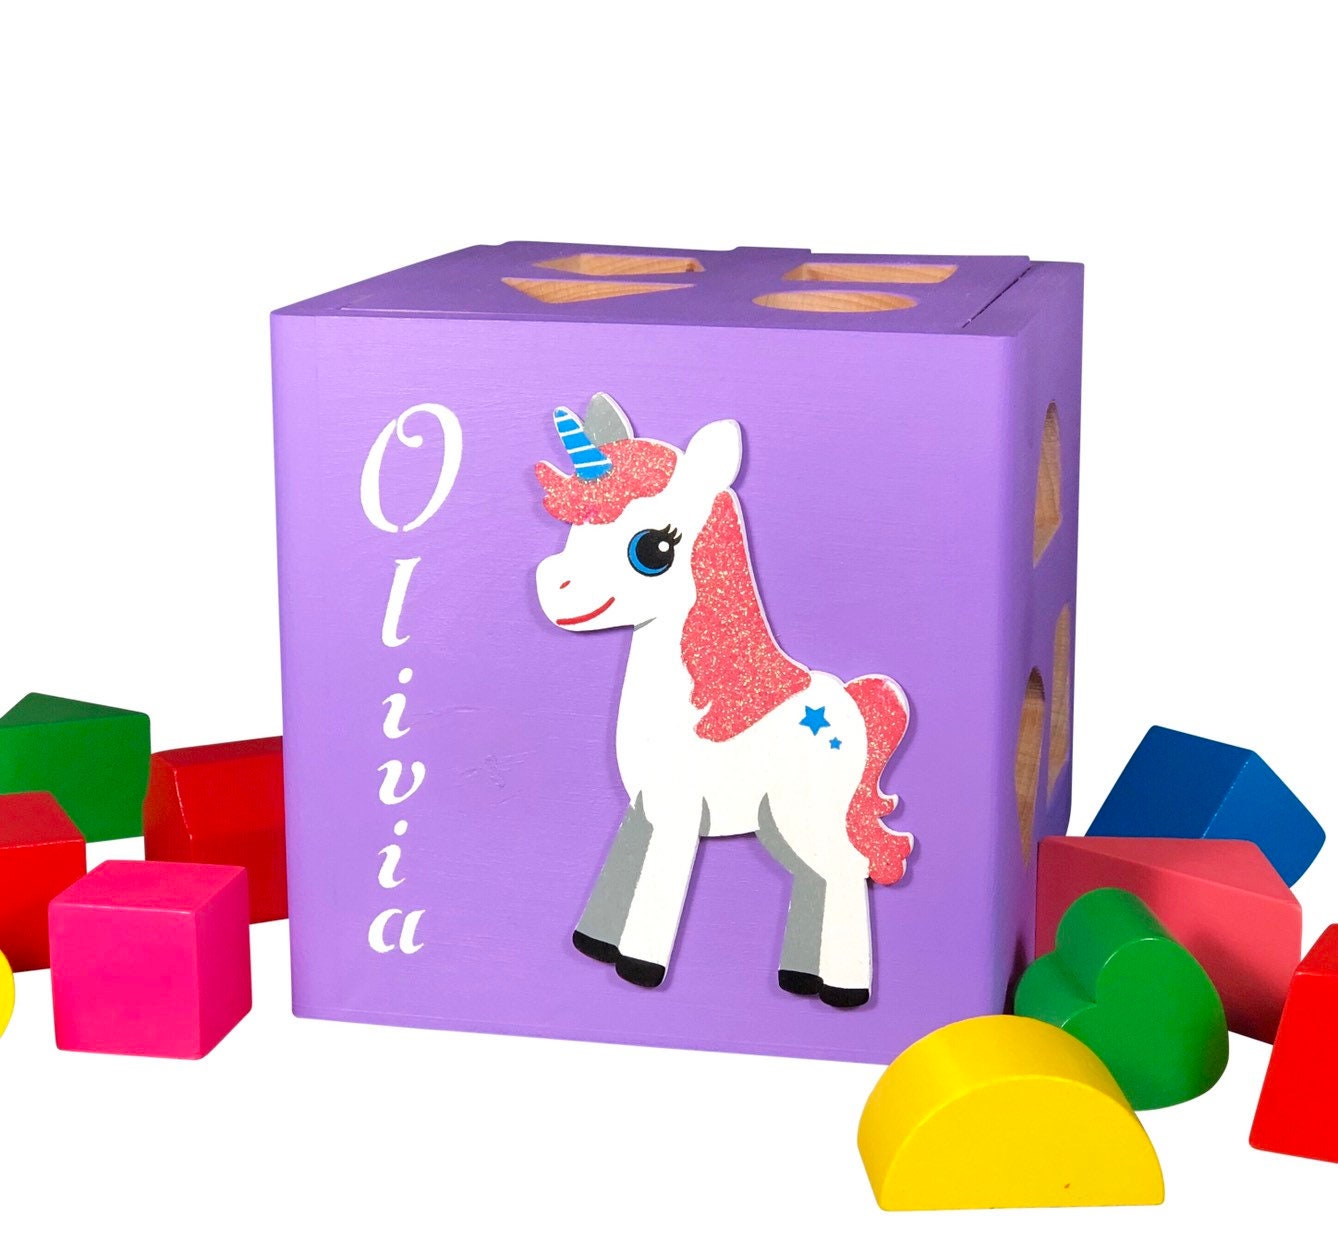 Unicorn baby gift / New baby gift idea / shape sorting box